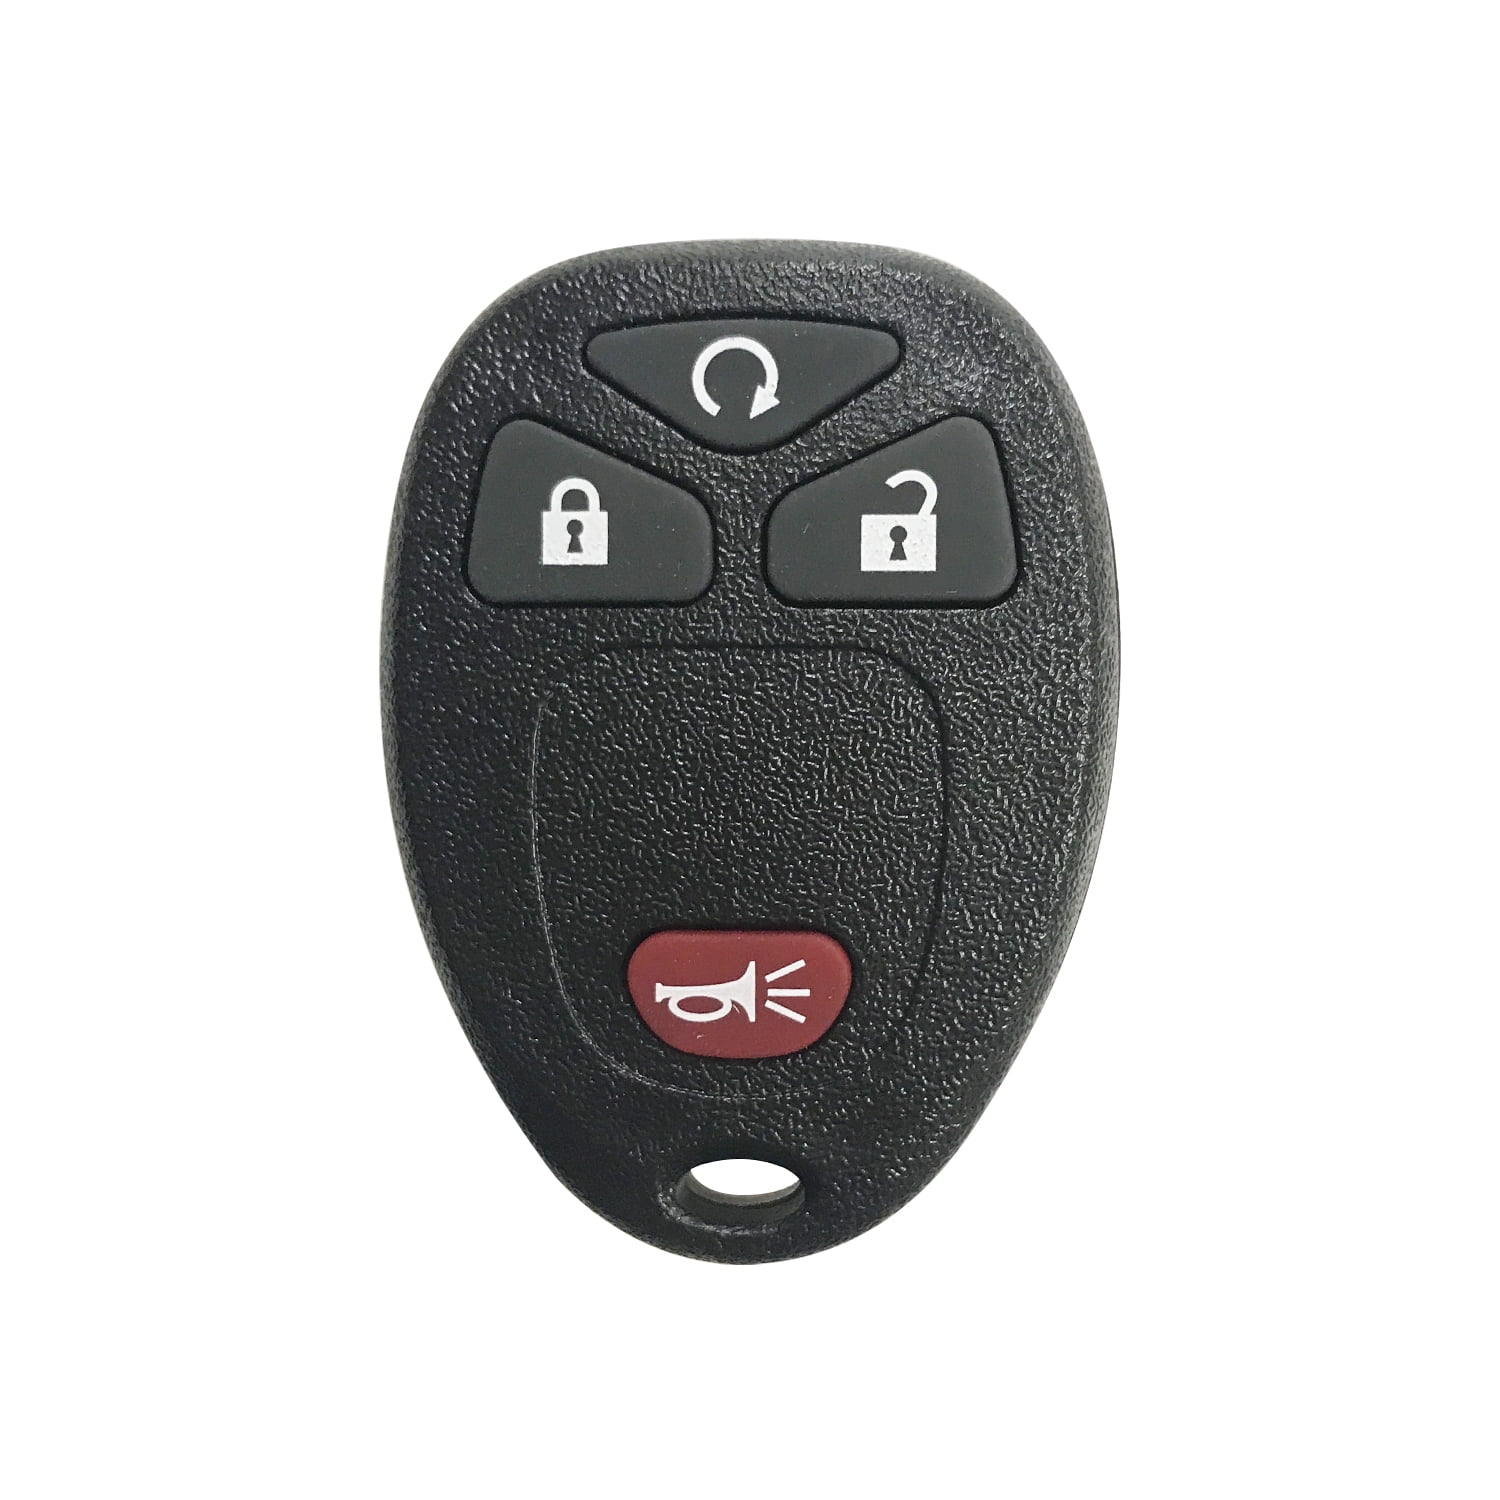 2PACK SILVERADO 07-13 for CHEVROLET Keyless Remote Control Car Key Fob OUC60270 